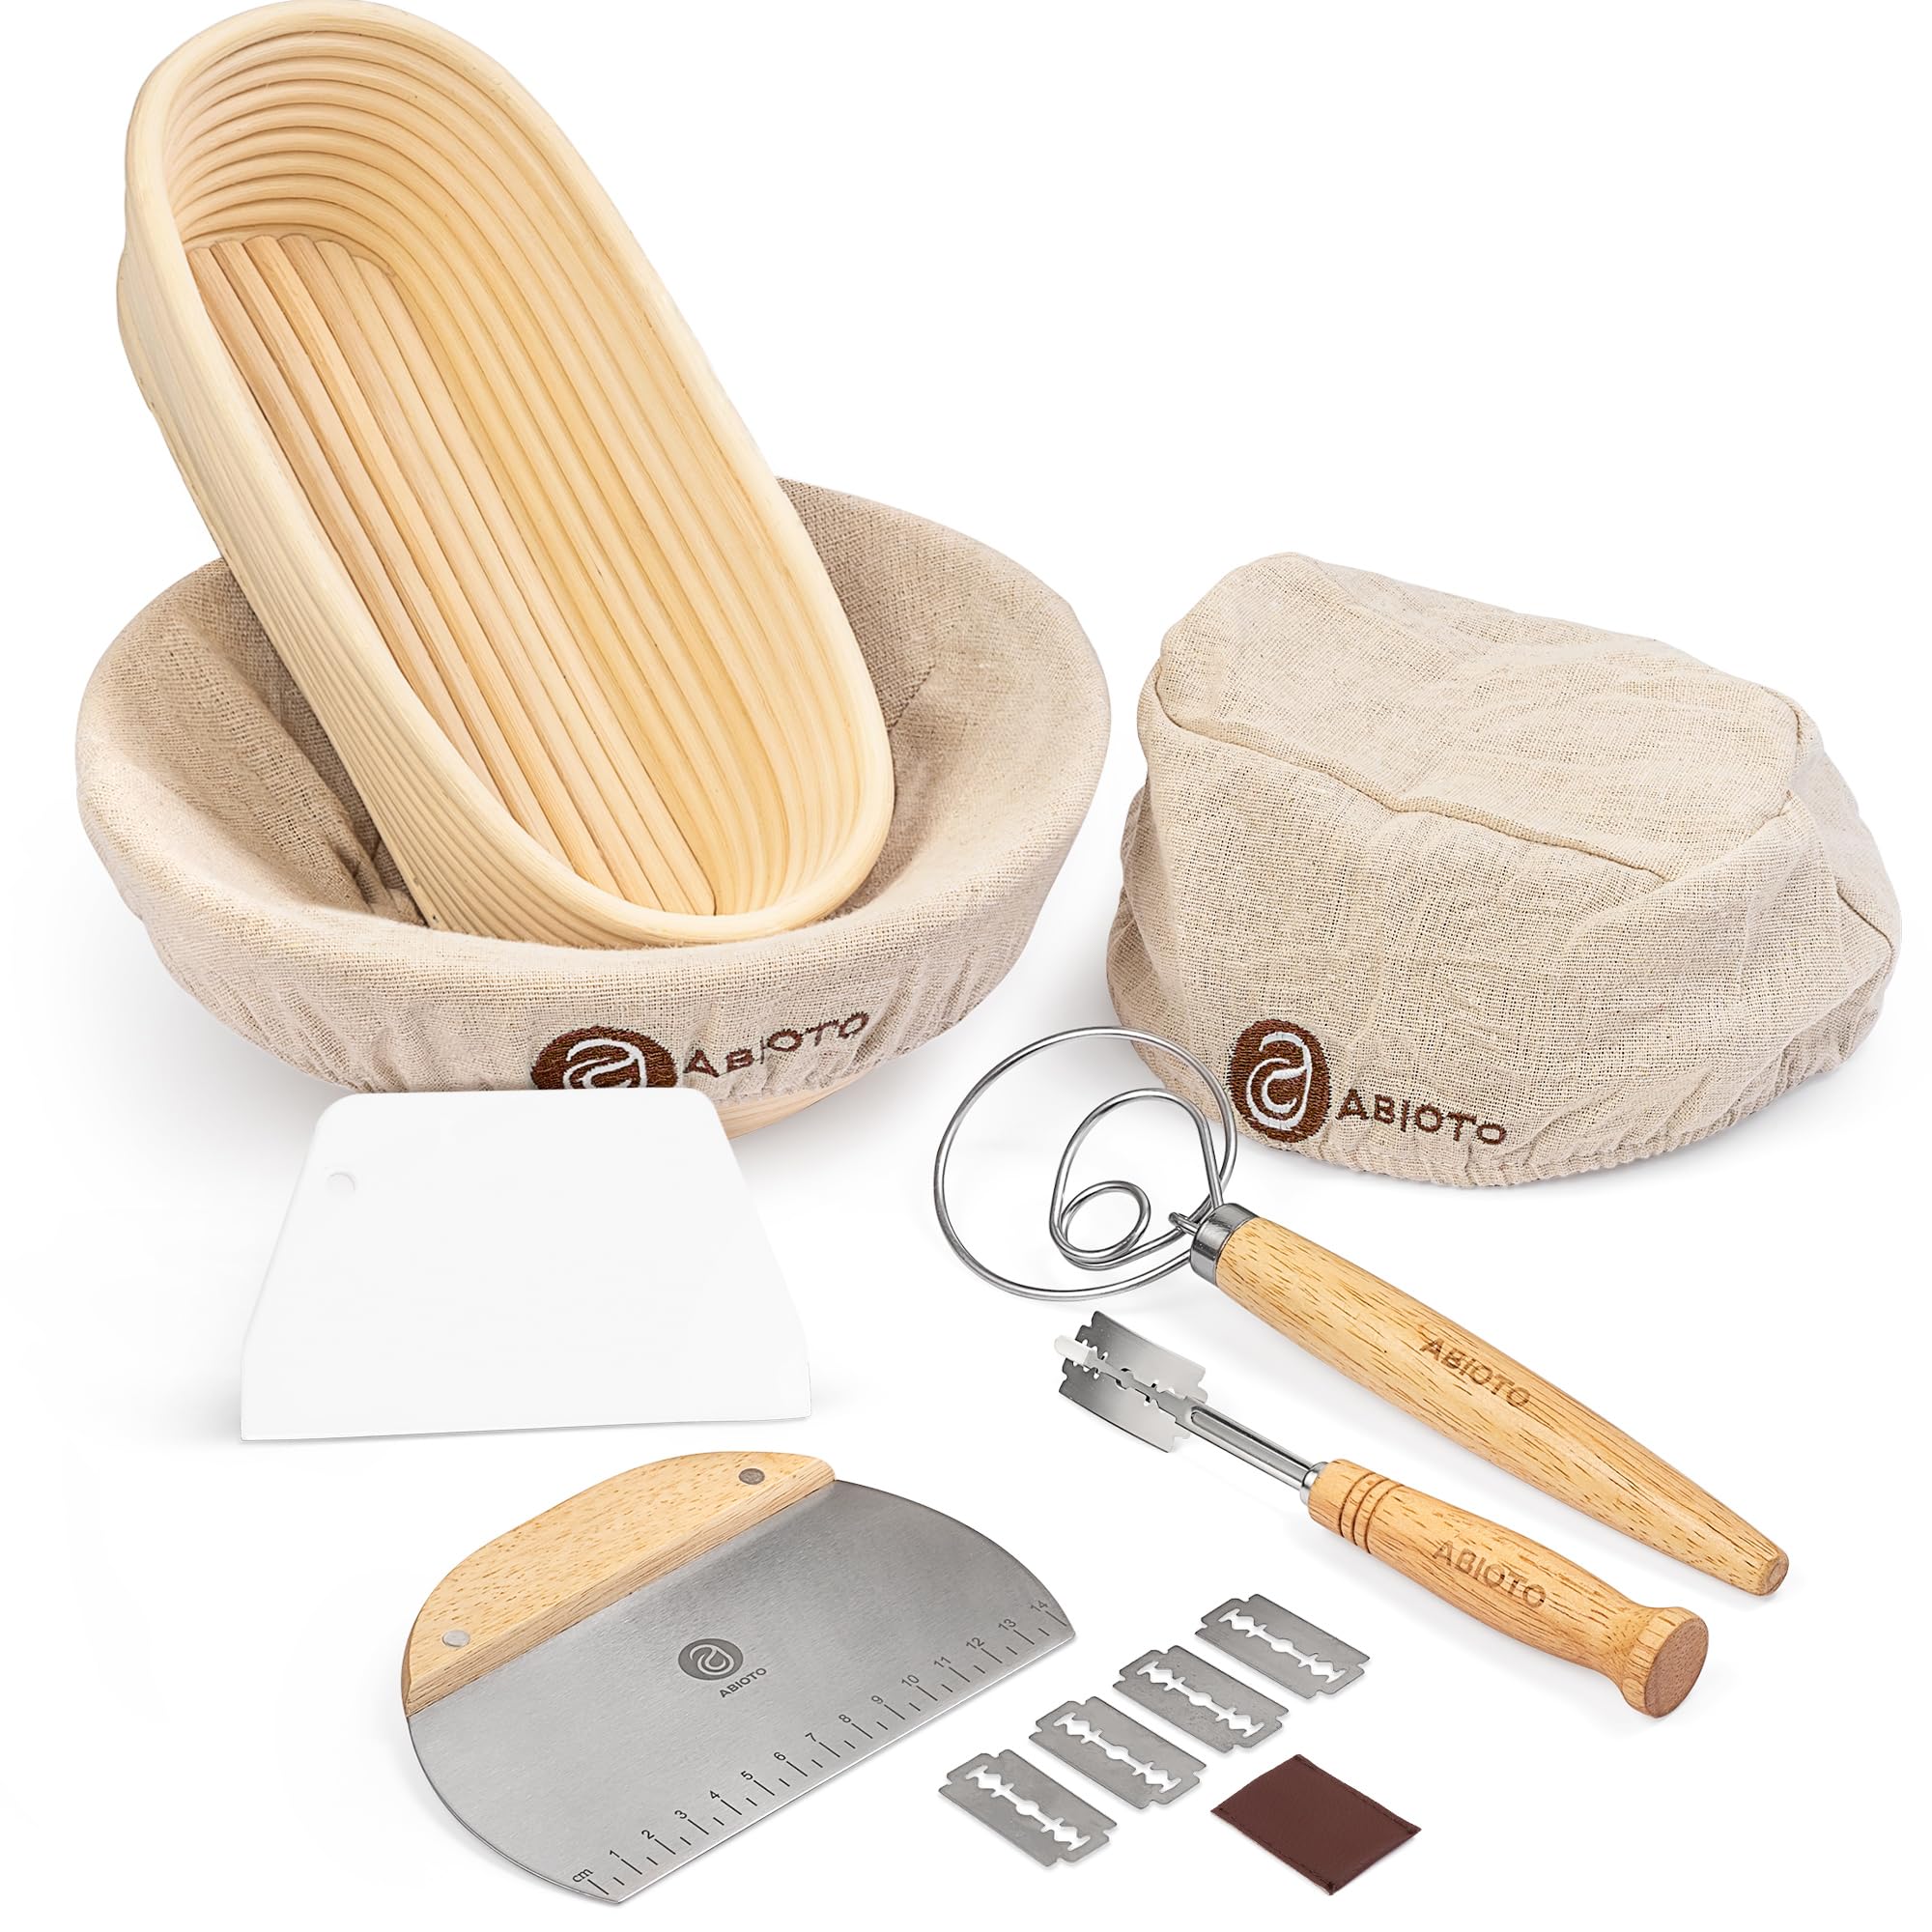 Sourdough Bread Baking Supplies - Bread Making Kit Includes 10